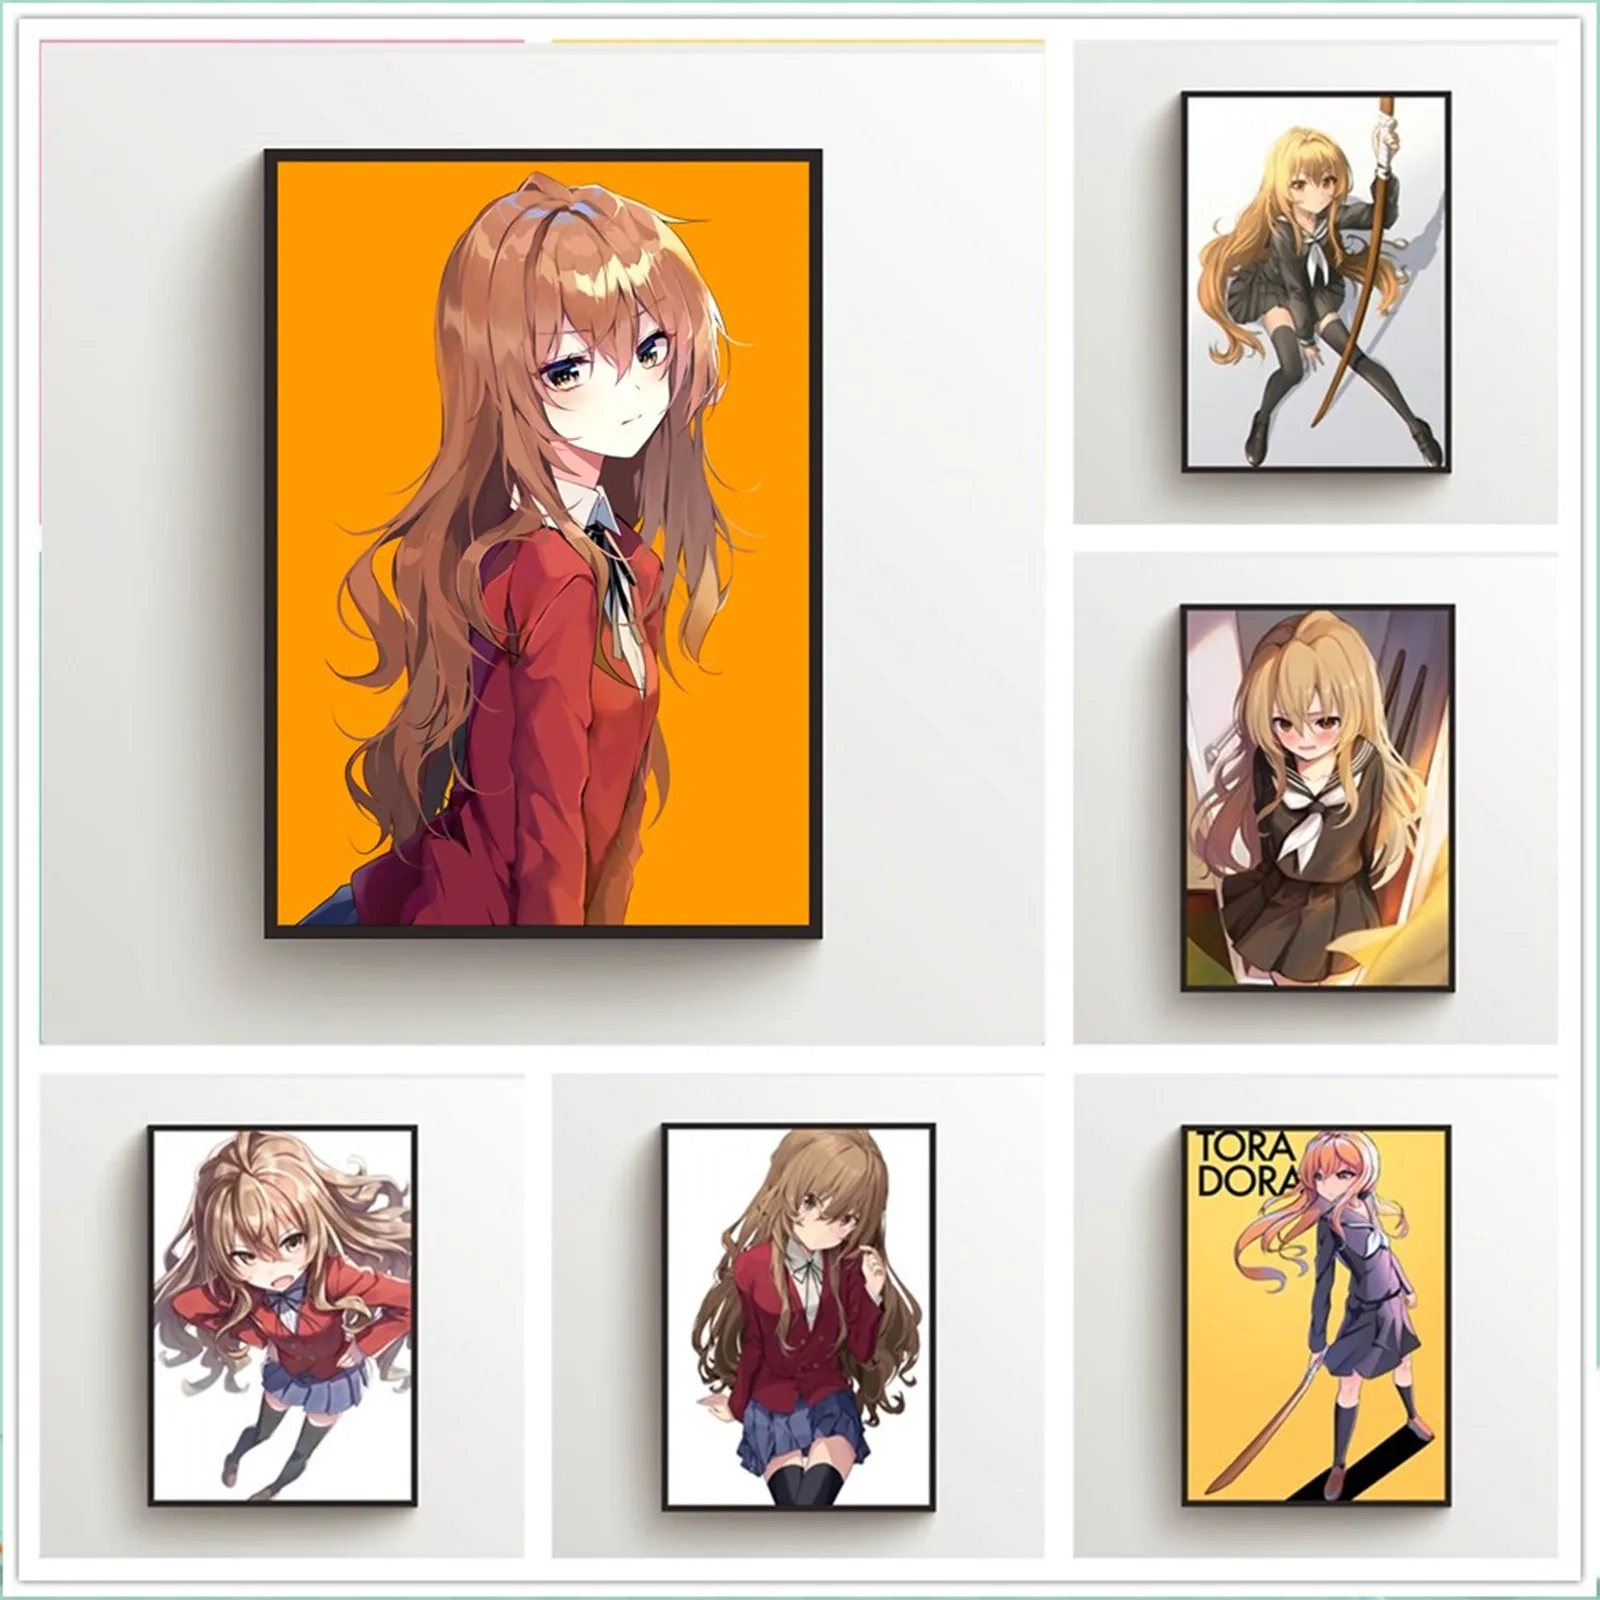  YOUQIAO Anime Toradora Ryuuji Takasu Aisaka Taiga Poster  Decorative Painting Canvas Wall Art Living Room Posters Bedroom Painting  20x30inch(50x75cm) : לבית ולמטבח